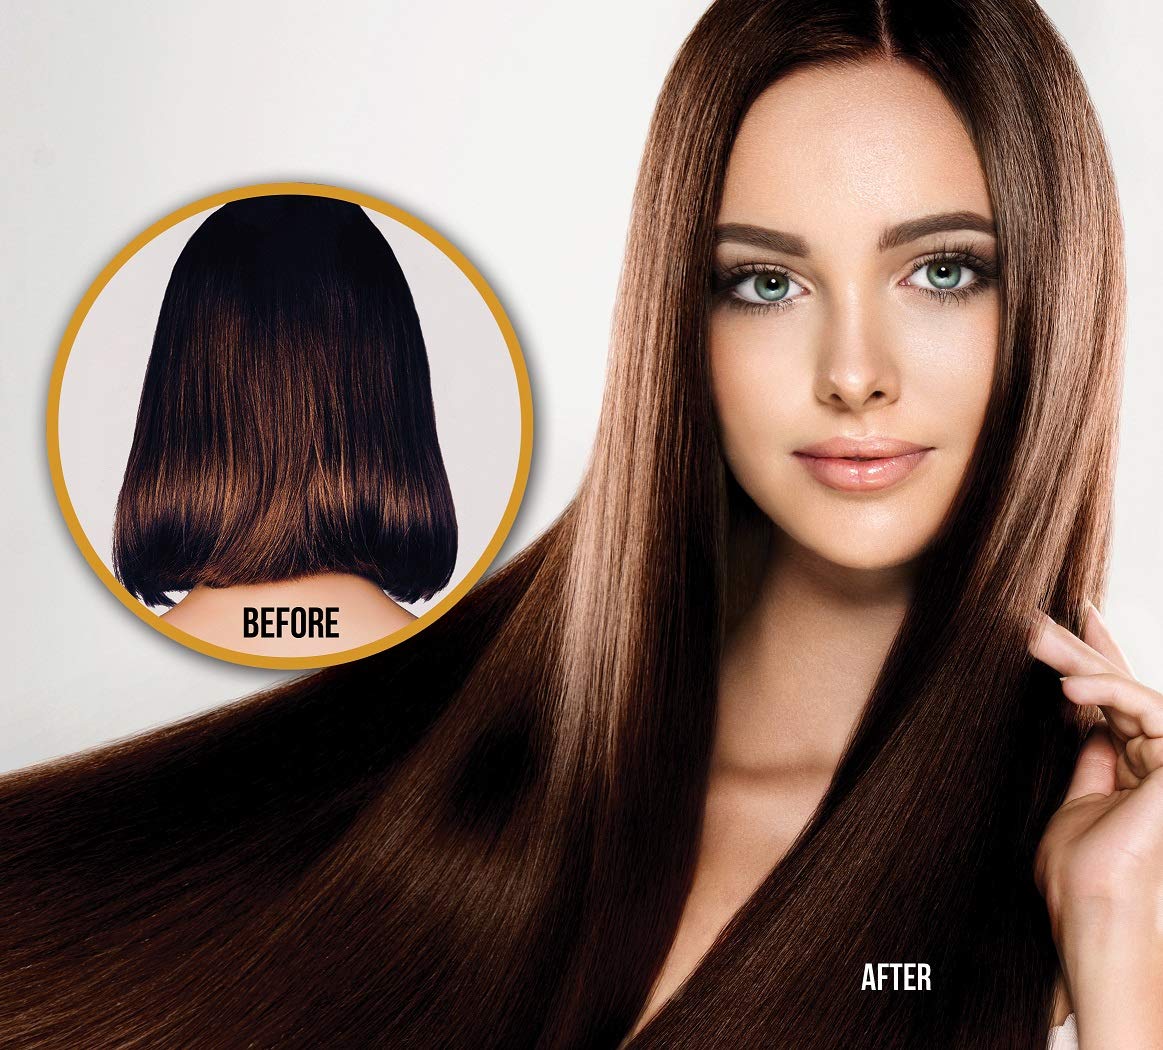 Difeel Castor Pro-Growth Hair Oil Collection 2-PC Set